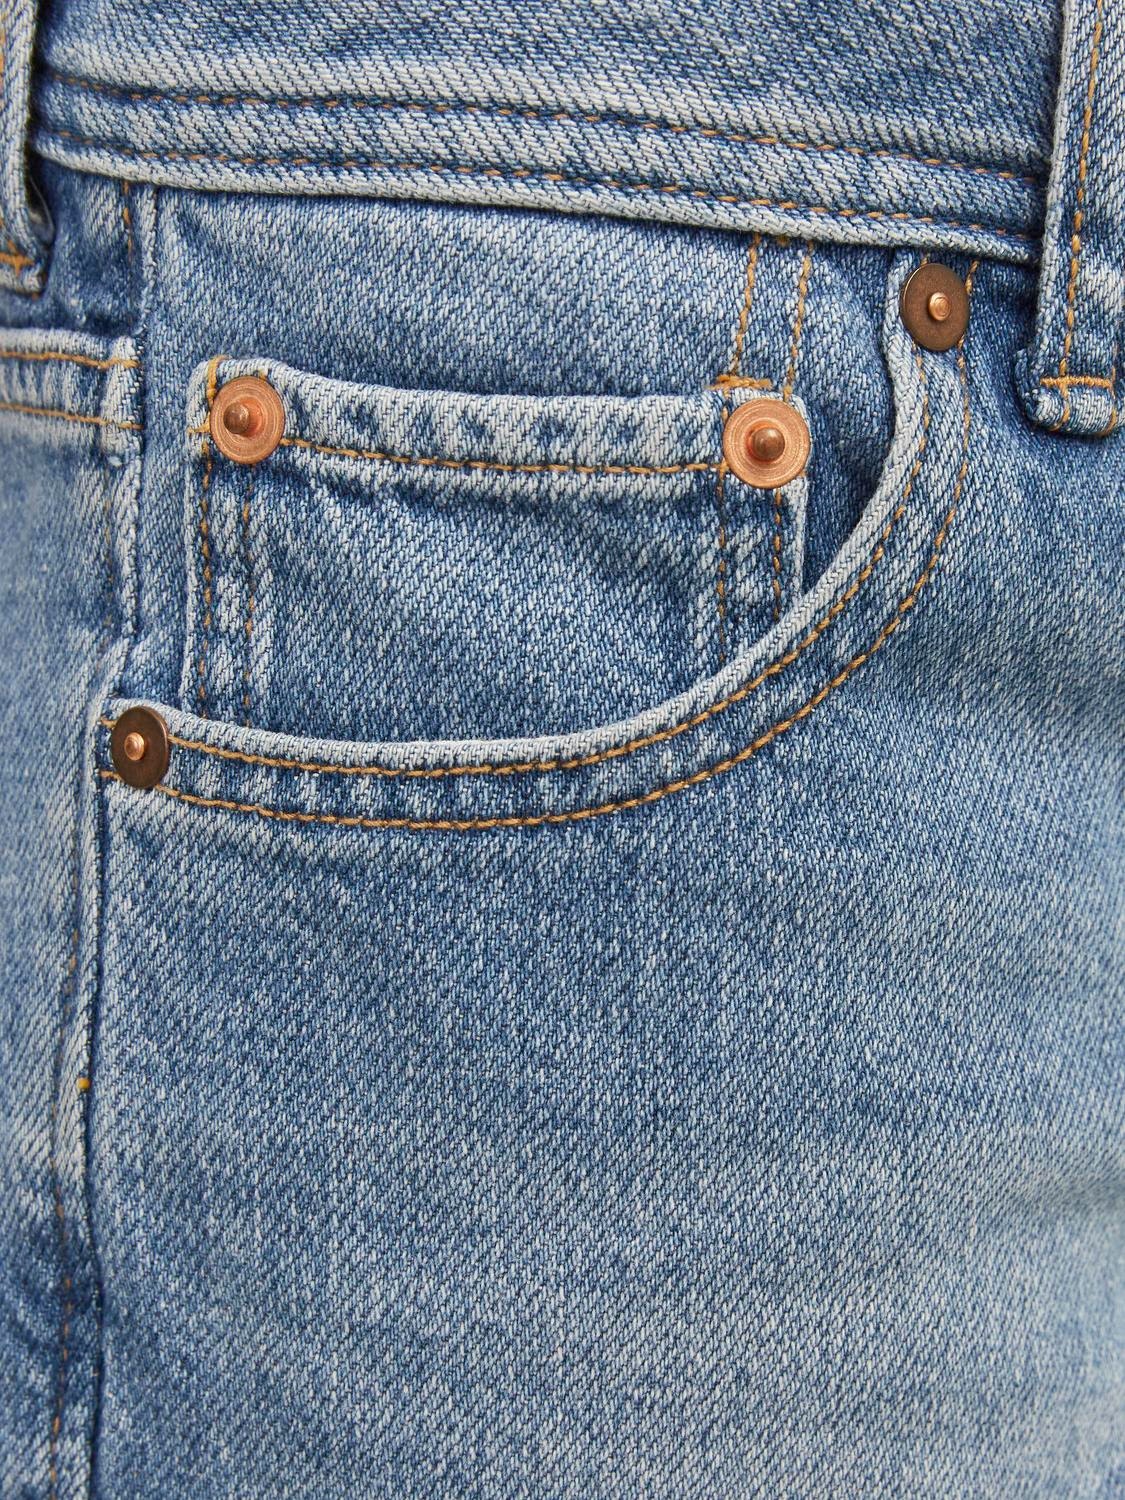 Jack & Jones Relaxed Fit Jeans-Shorts Für jungs -Blue Denim - 12250057